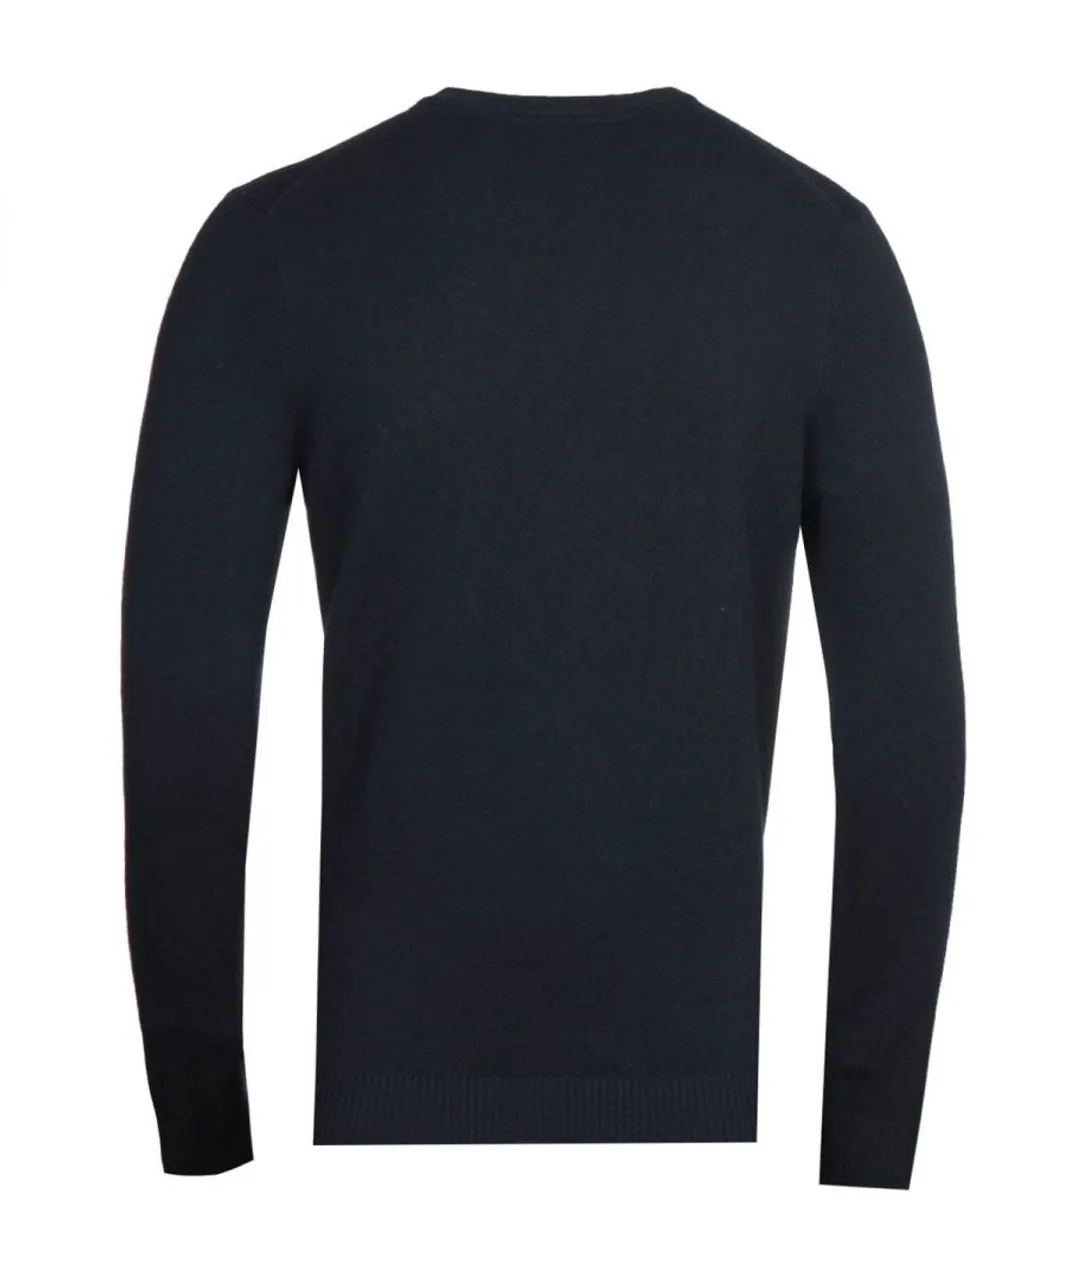 Lyle & Scott Mens V-Neck Merino Cotton Dark Navy Sweater